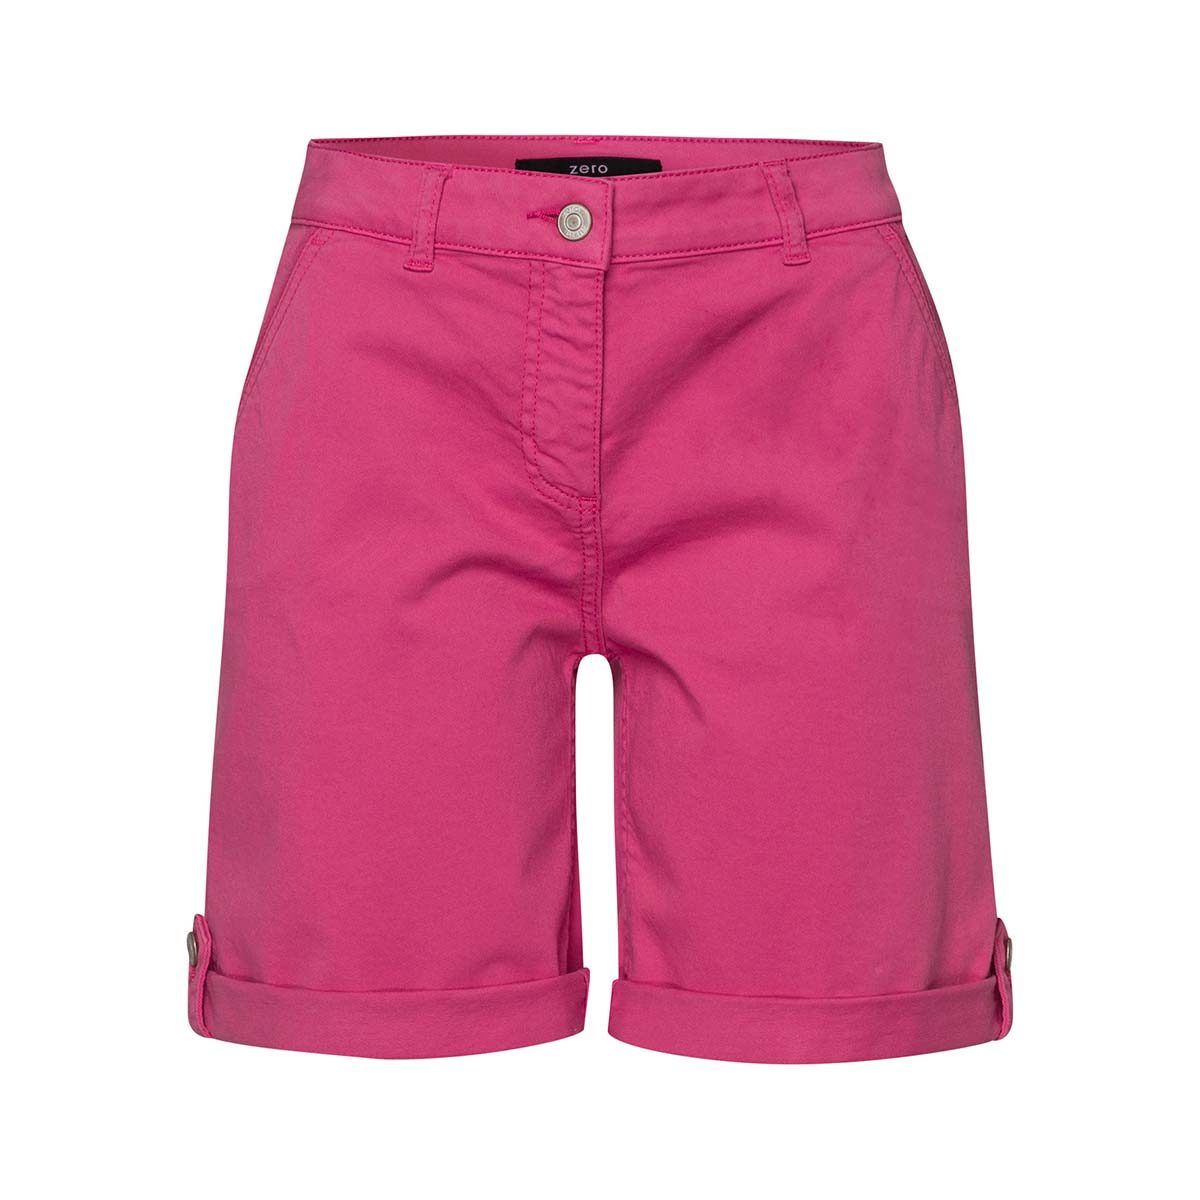 Shorts pink zero